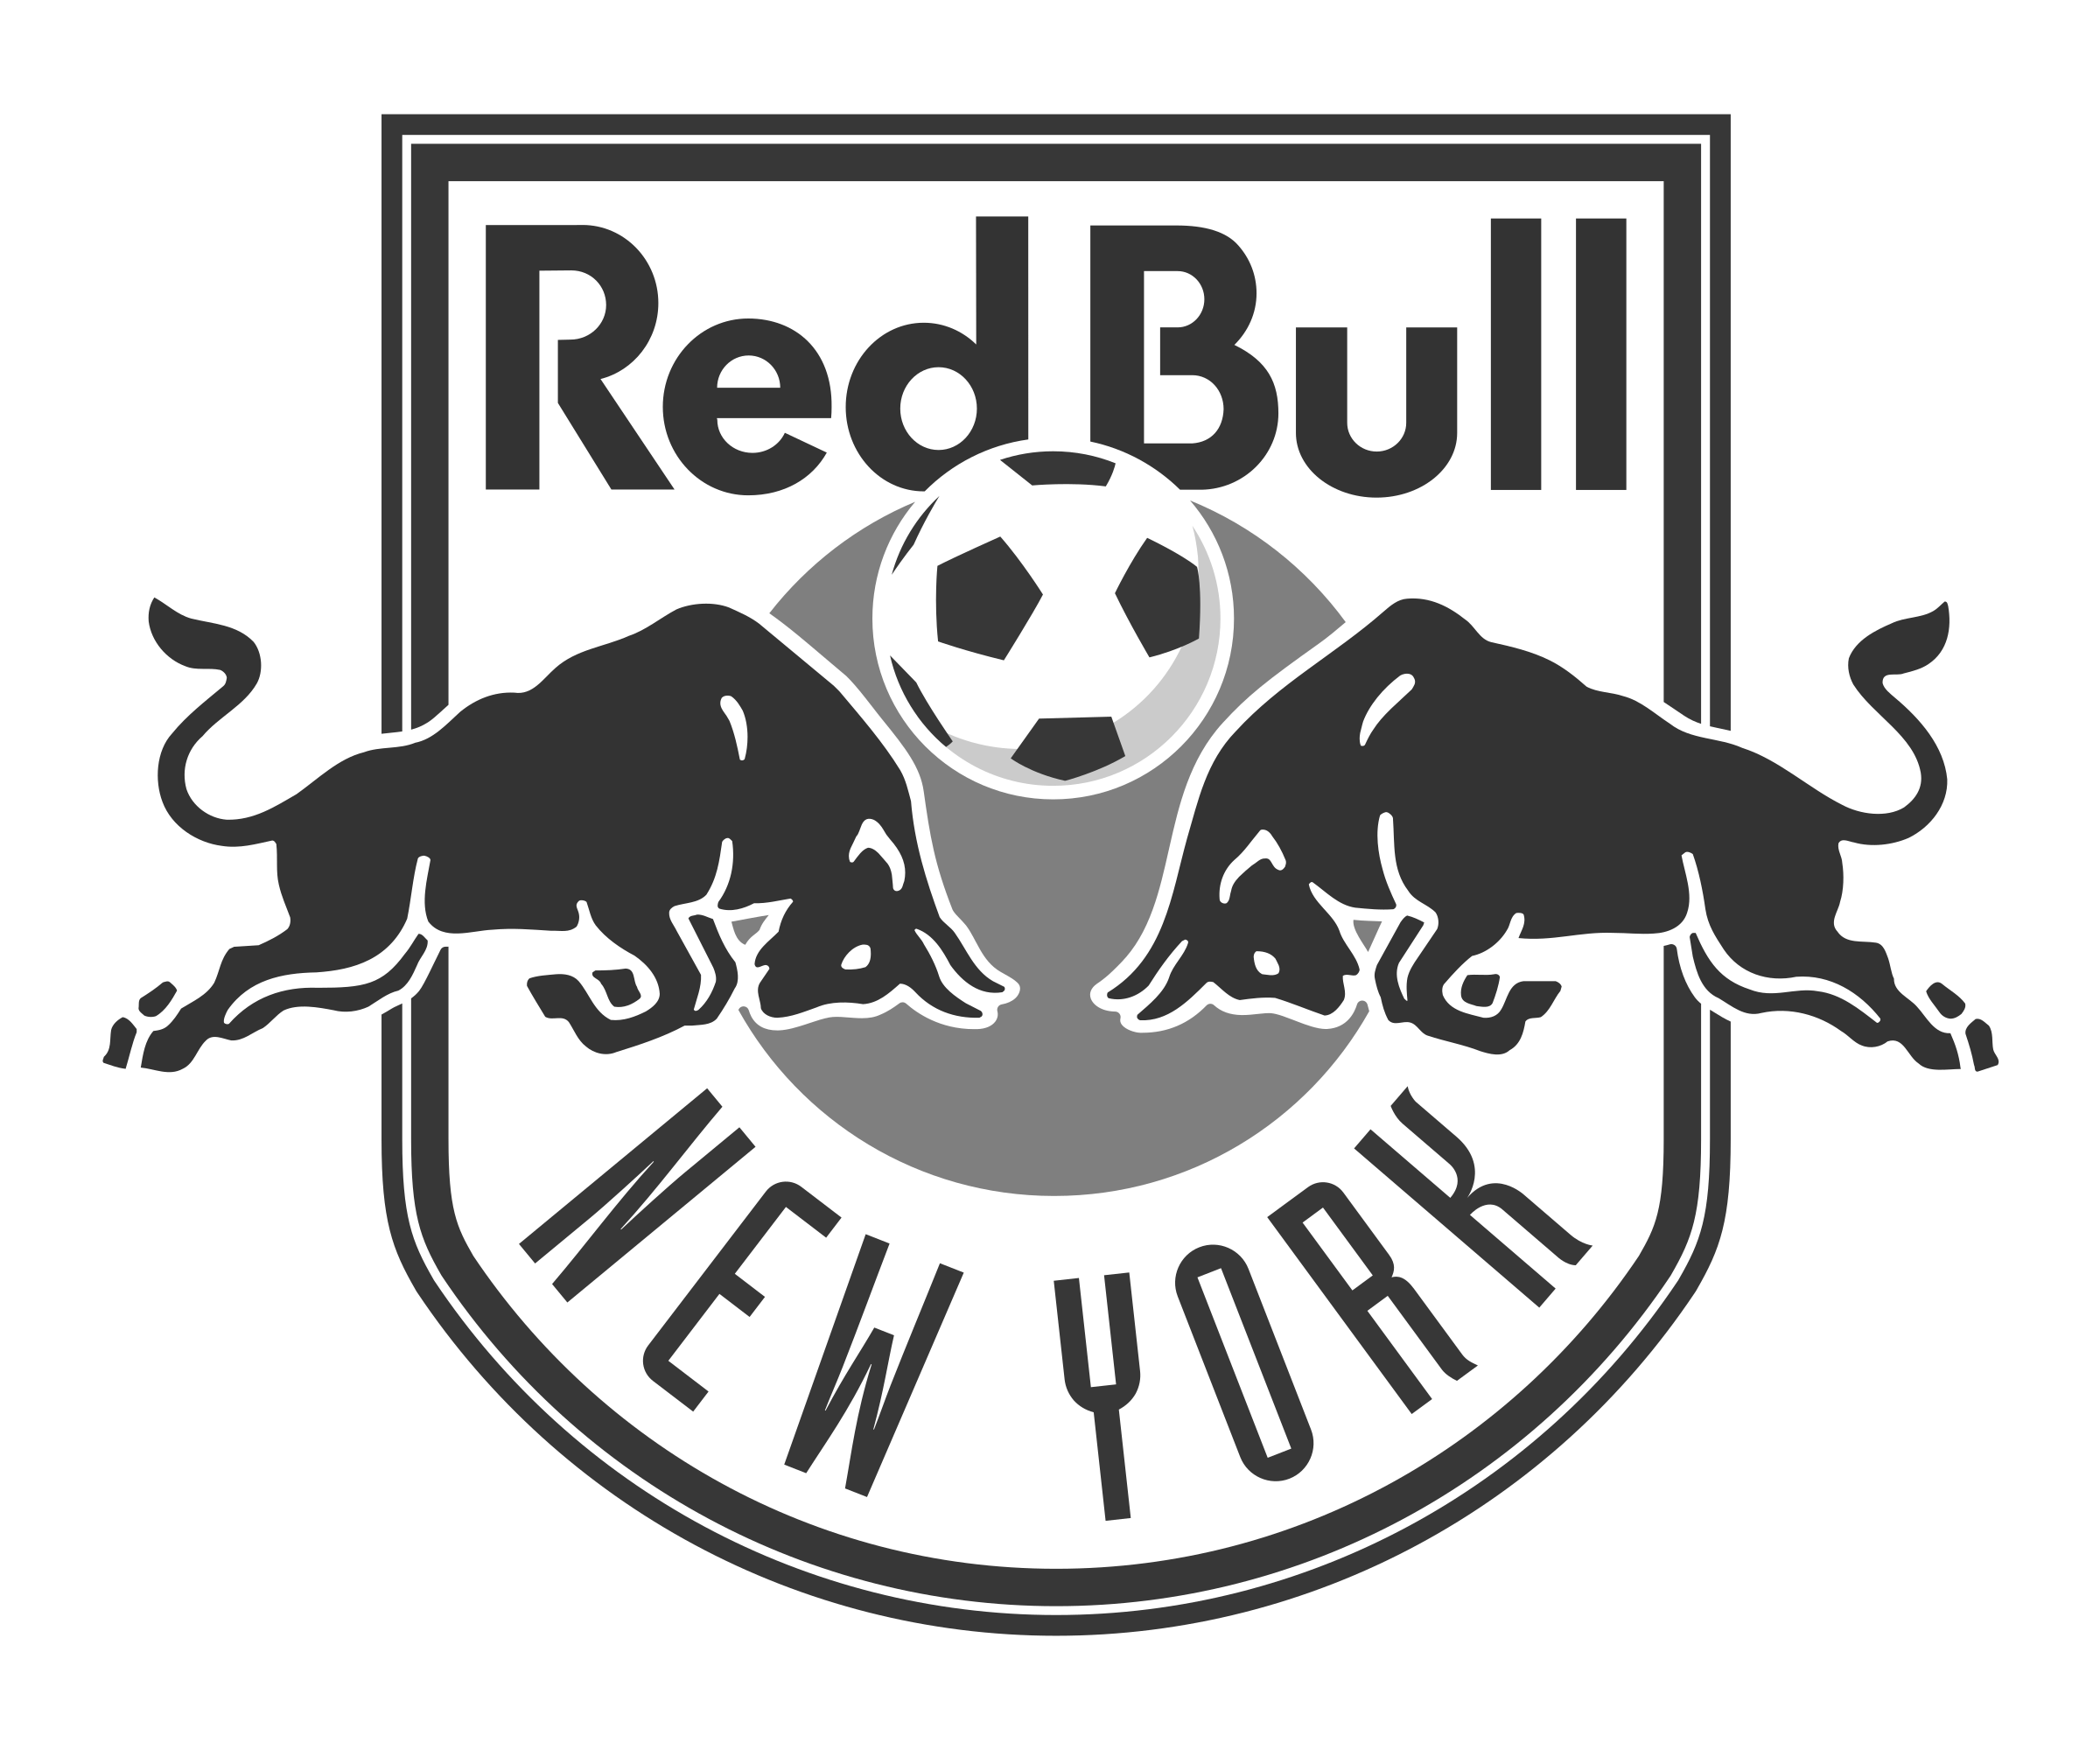 New York Red Bulls Logo - New York Red Bulls Logo PNG Transparent & SVG Vector - Freebie Supply